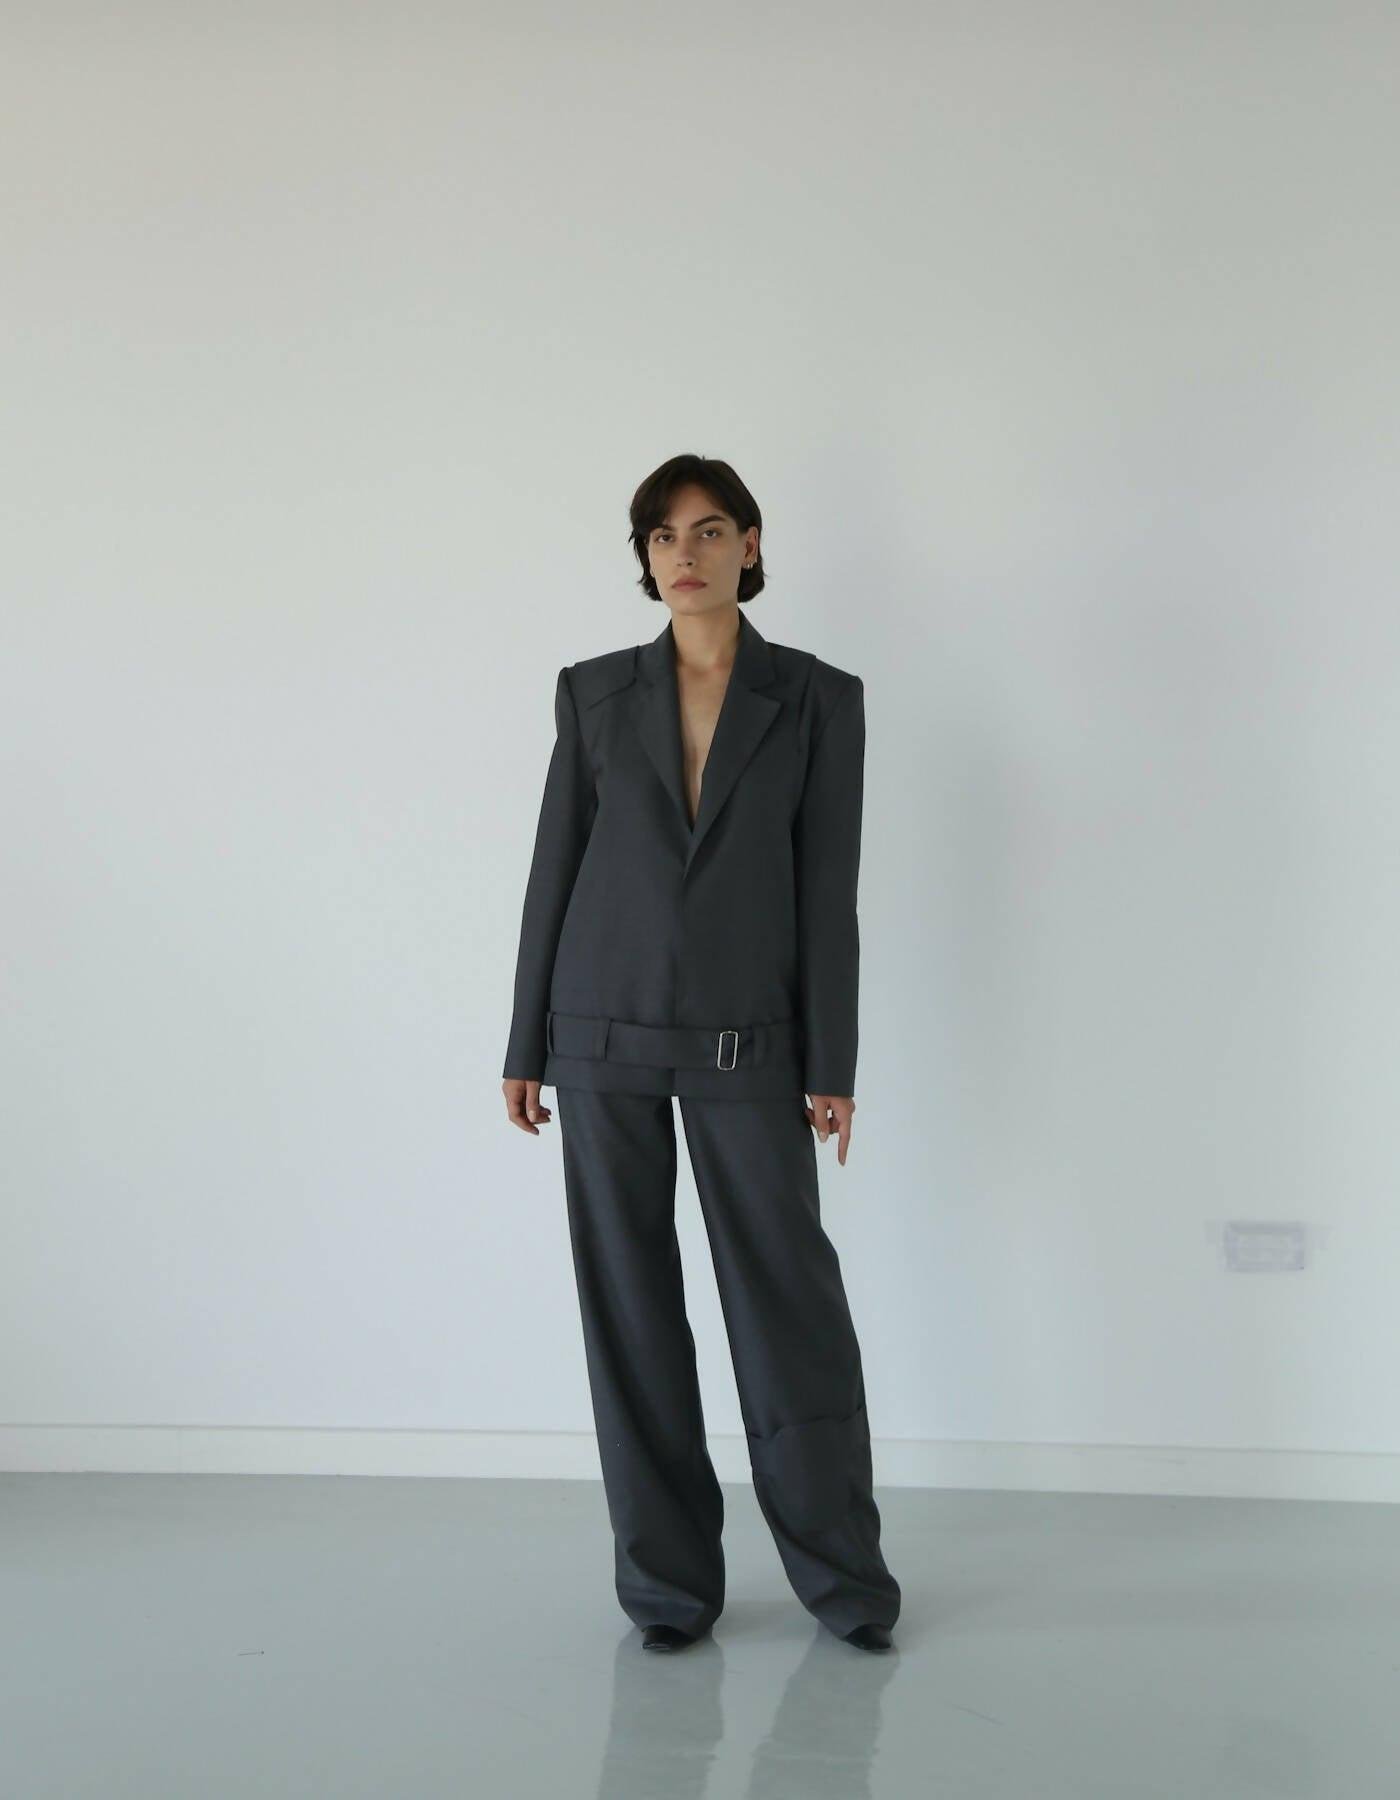 Minerva Pant Suit by MAET STUDIO